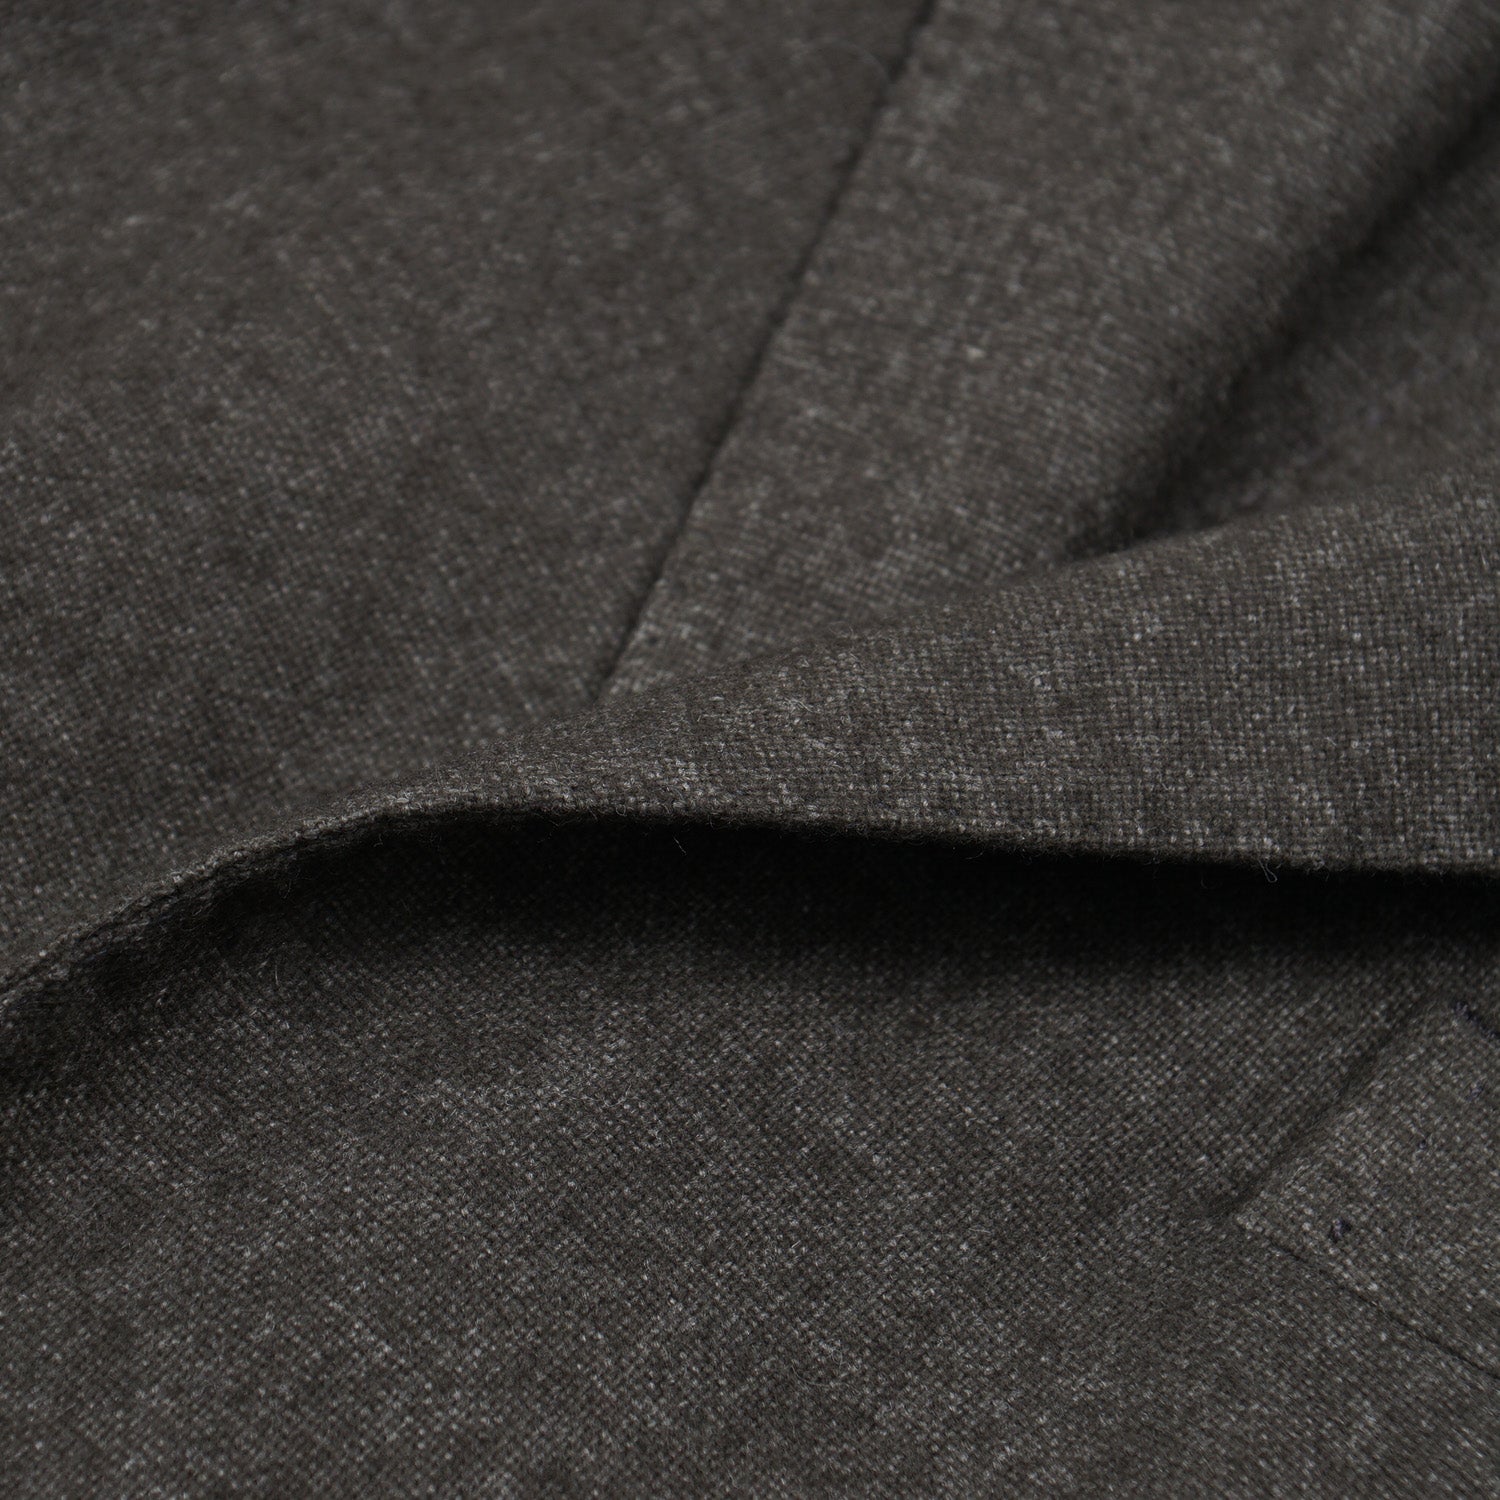 Boglioli Soft Wool 'K Jacket' Sport Coat - Top Shelf Apparel